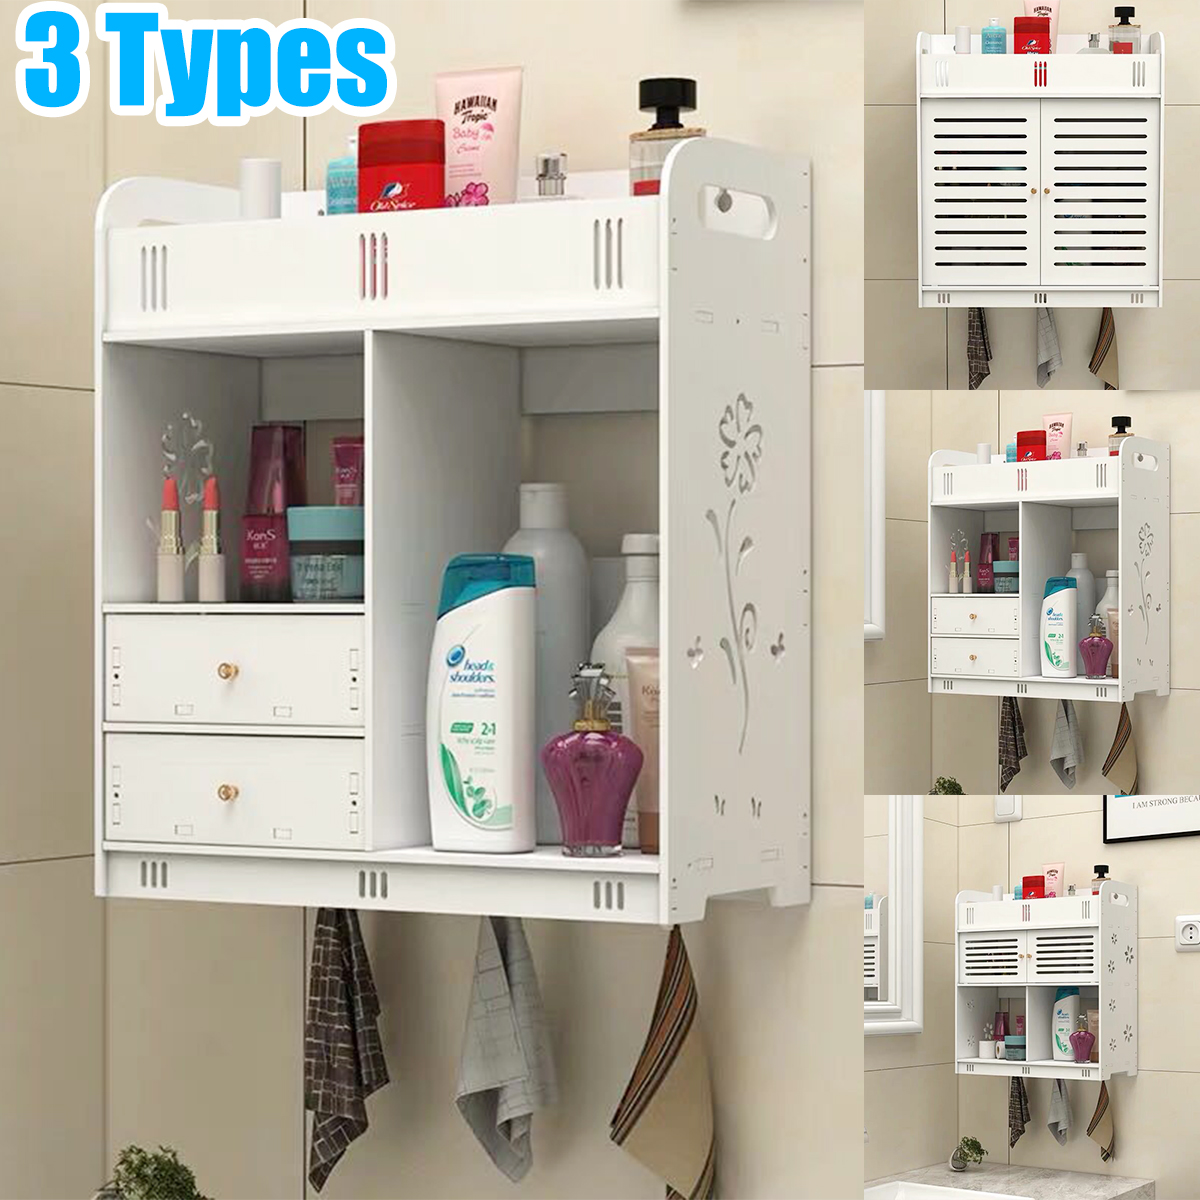 Bathroom-Wall-Mounted-Storage-Rack-Towels-Shower-Gel-Shampoo-Organizer-Home-Office-Living-Room-Kitch-1773889-1